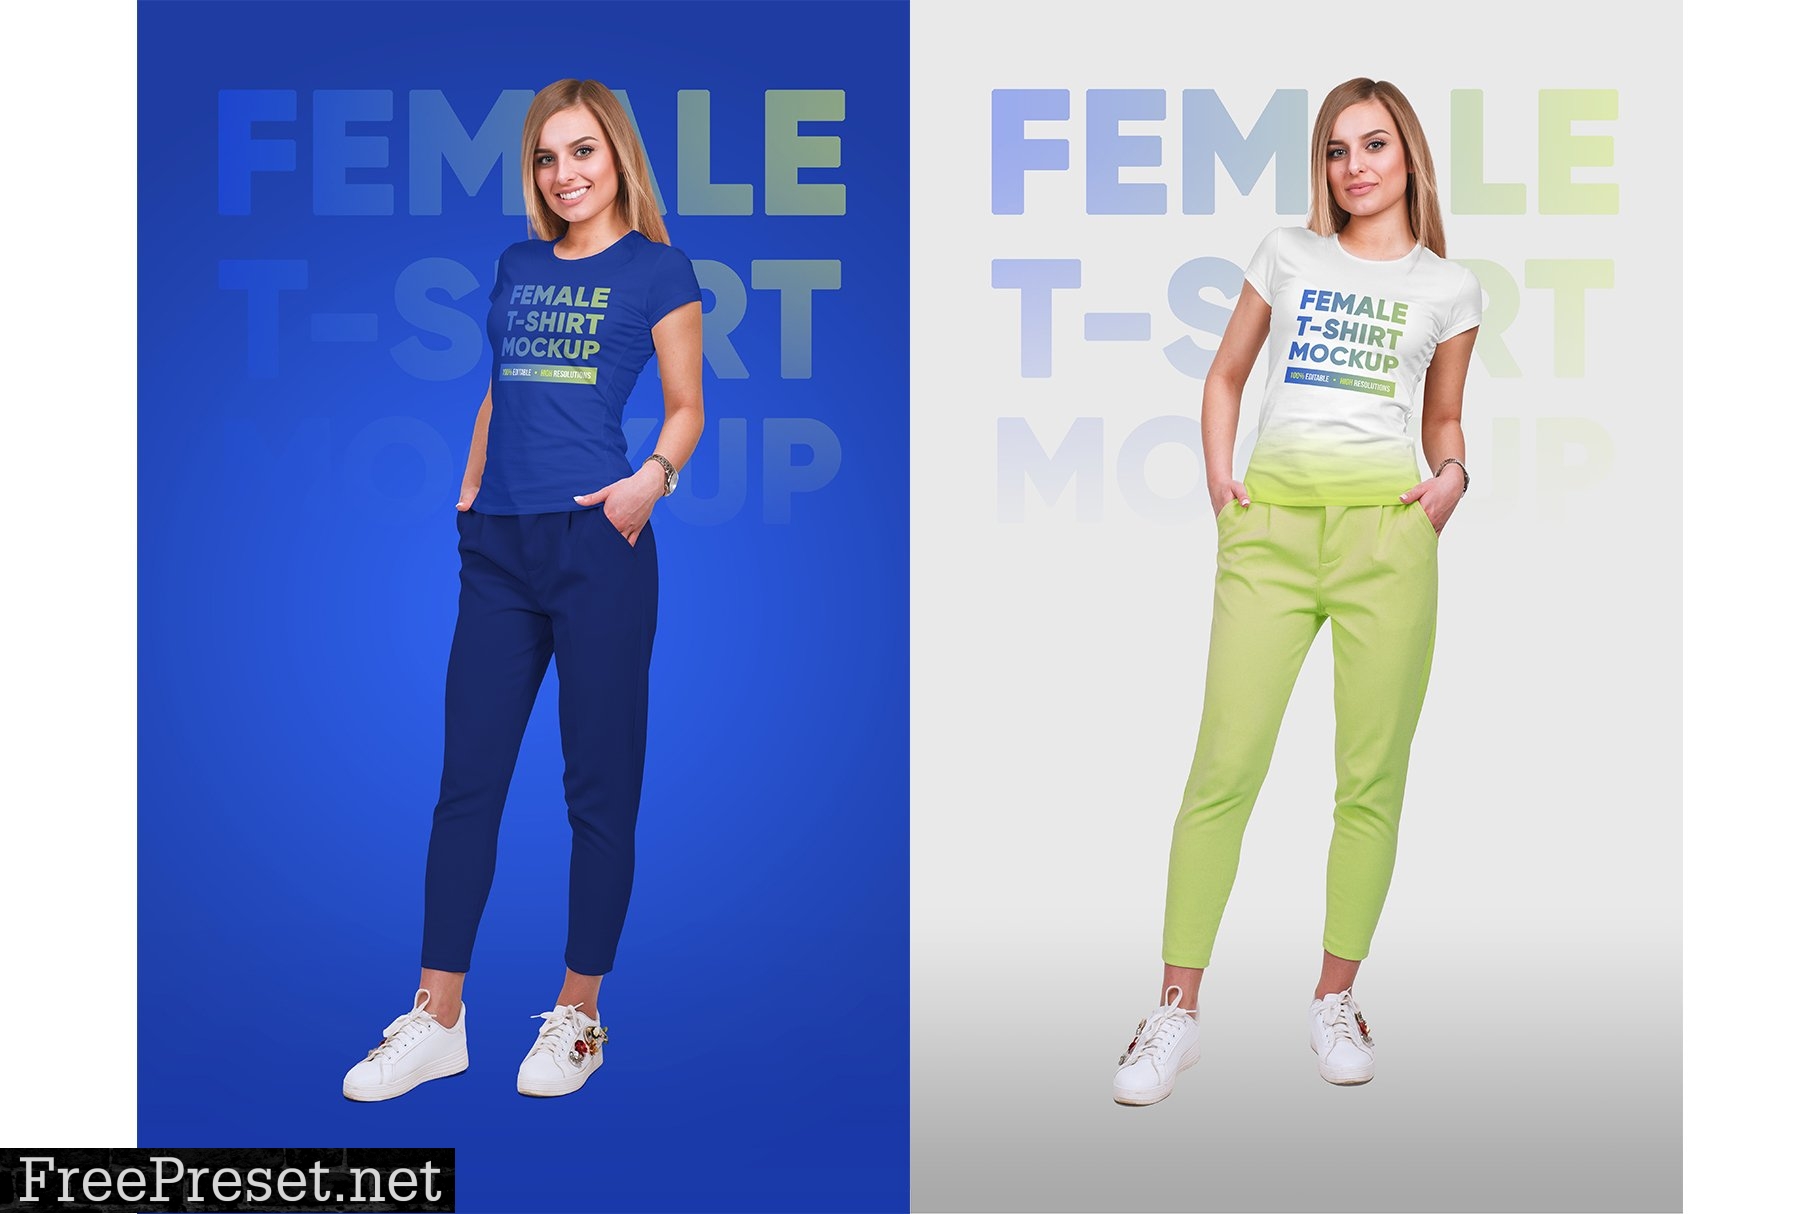 Female T-Shirt Mockups Vol 4 Part 1 5336759